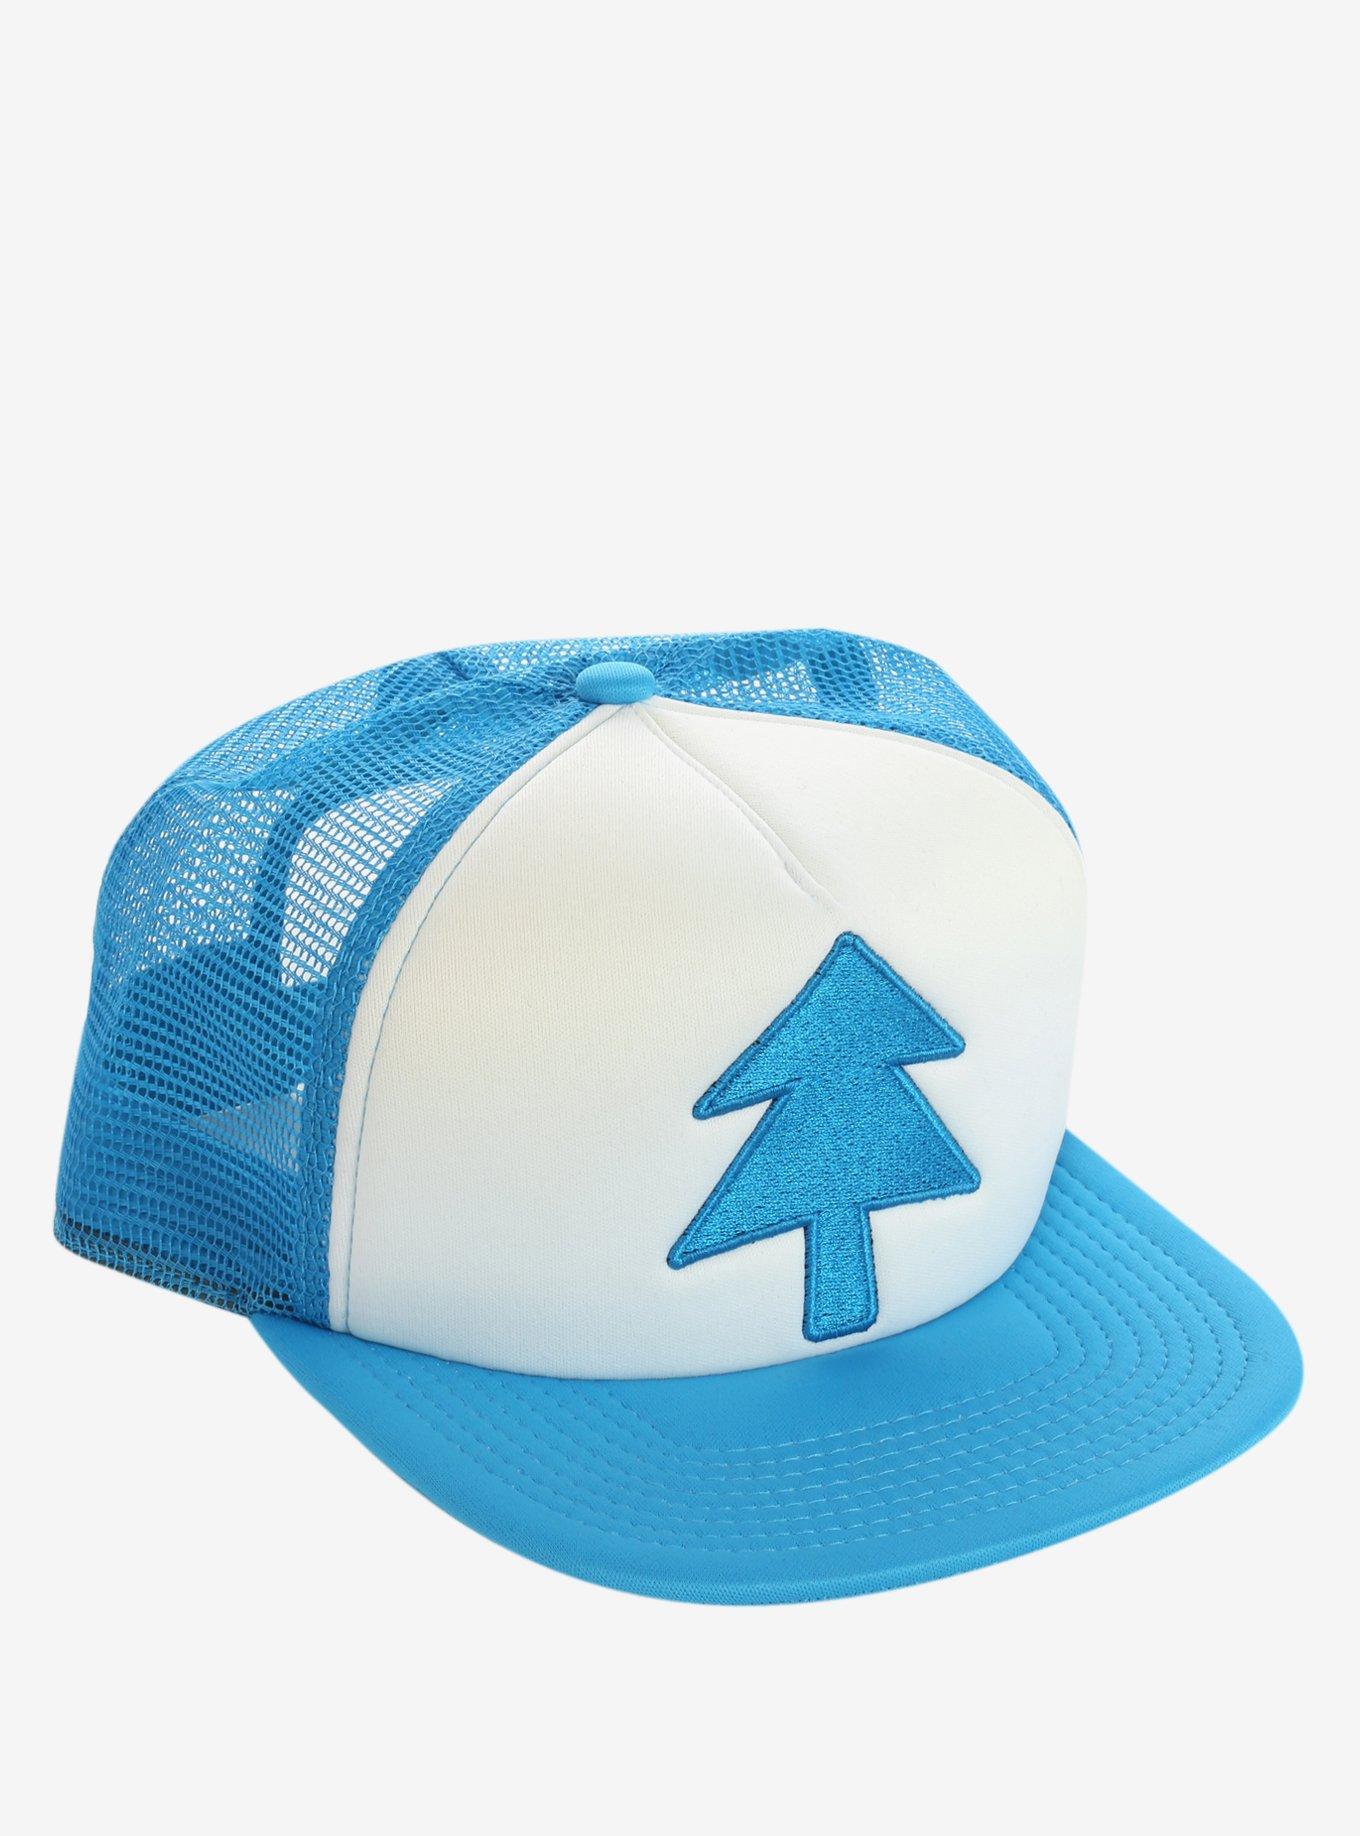 Gravity Falls Dipper Pines Cosplay Trucker Hat, , hi-res